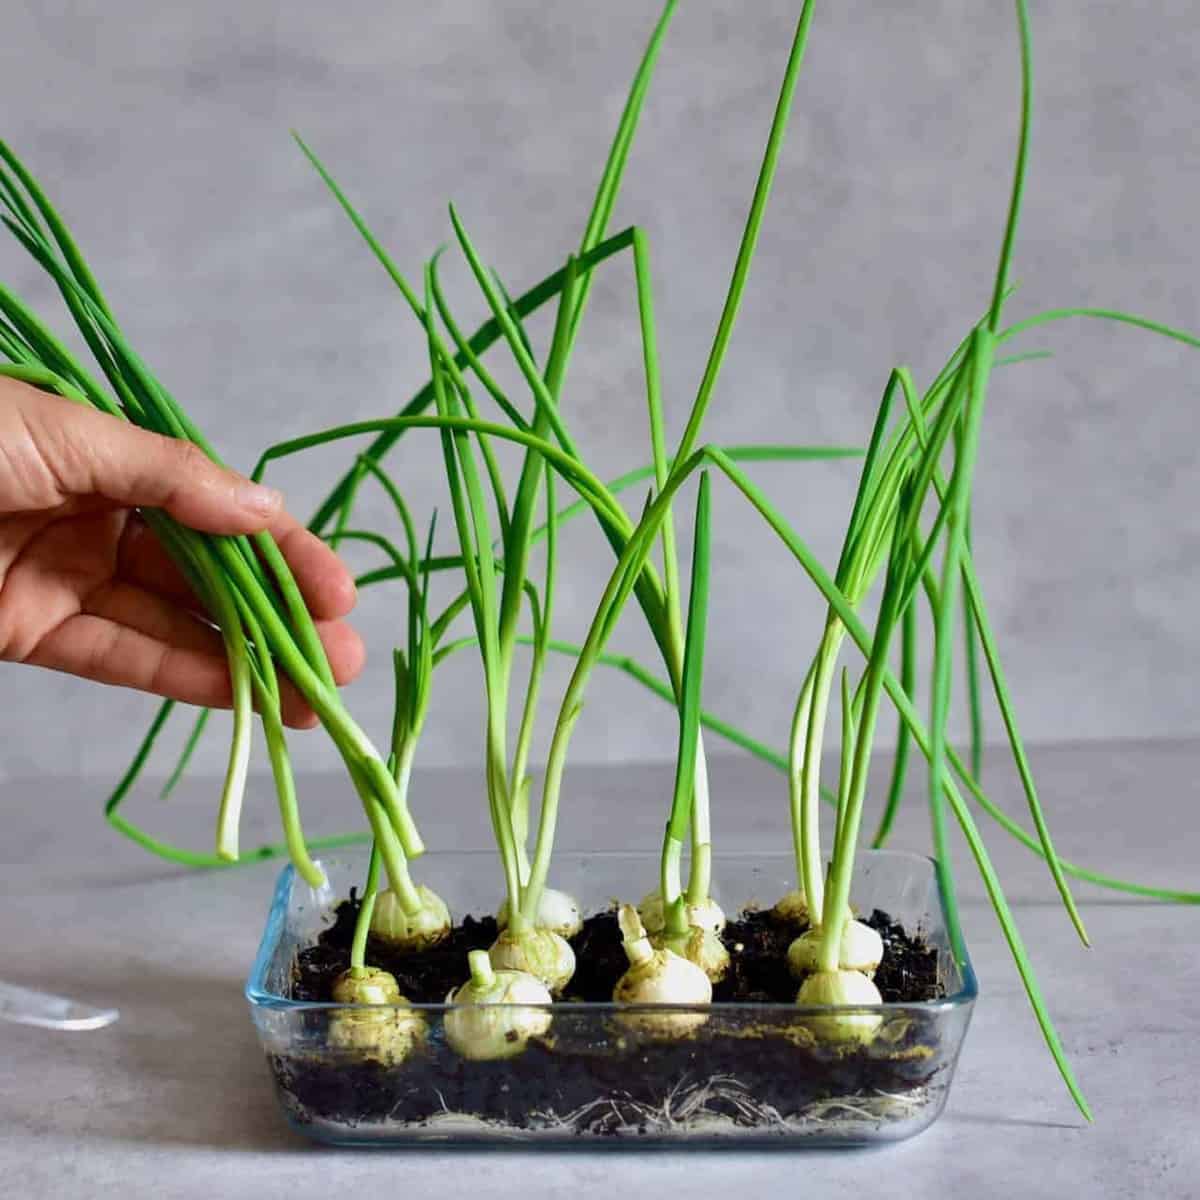 How to Grow Onion